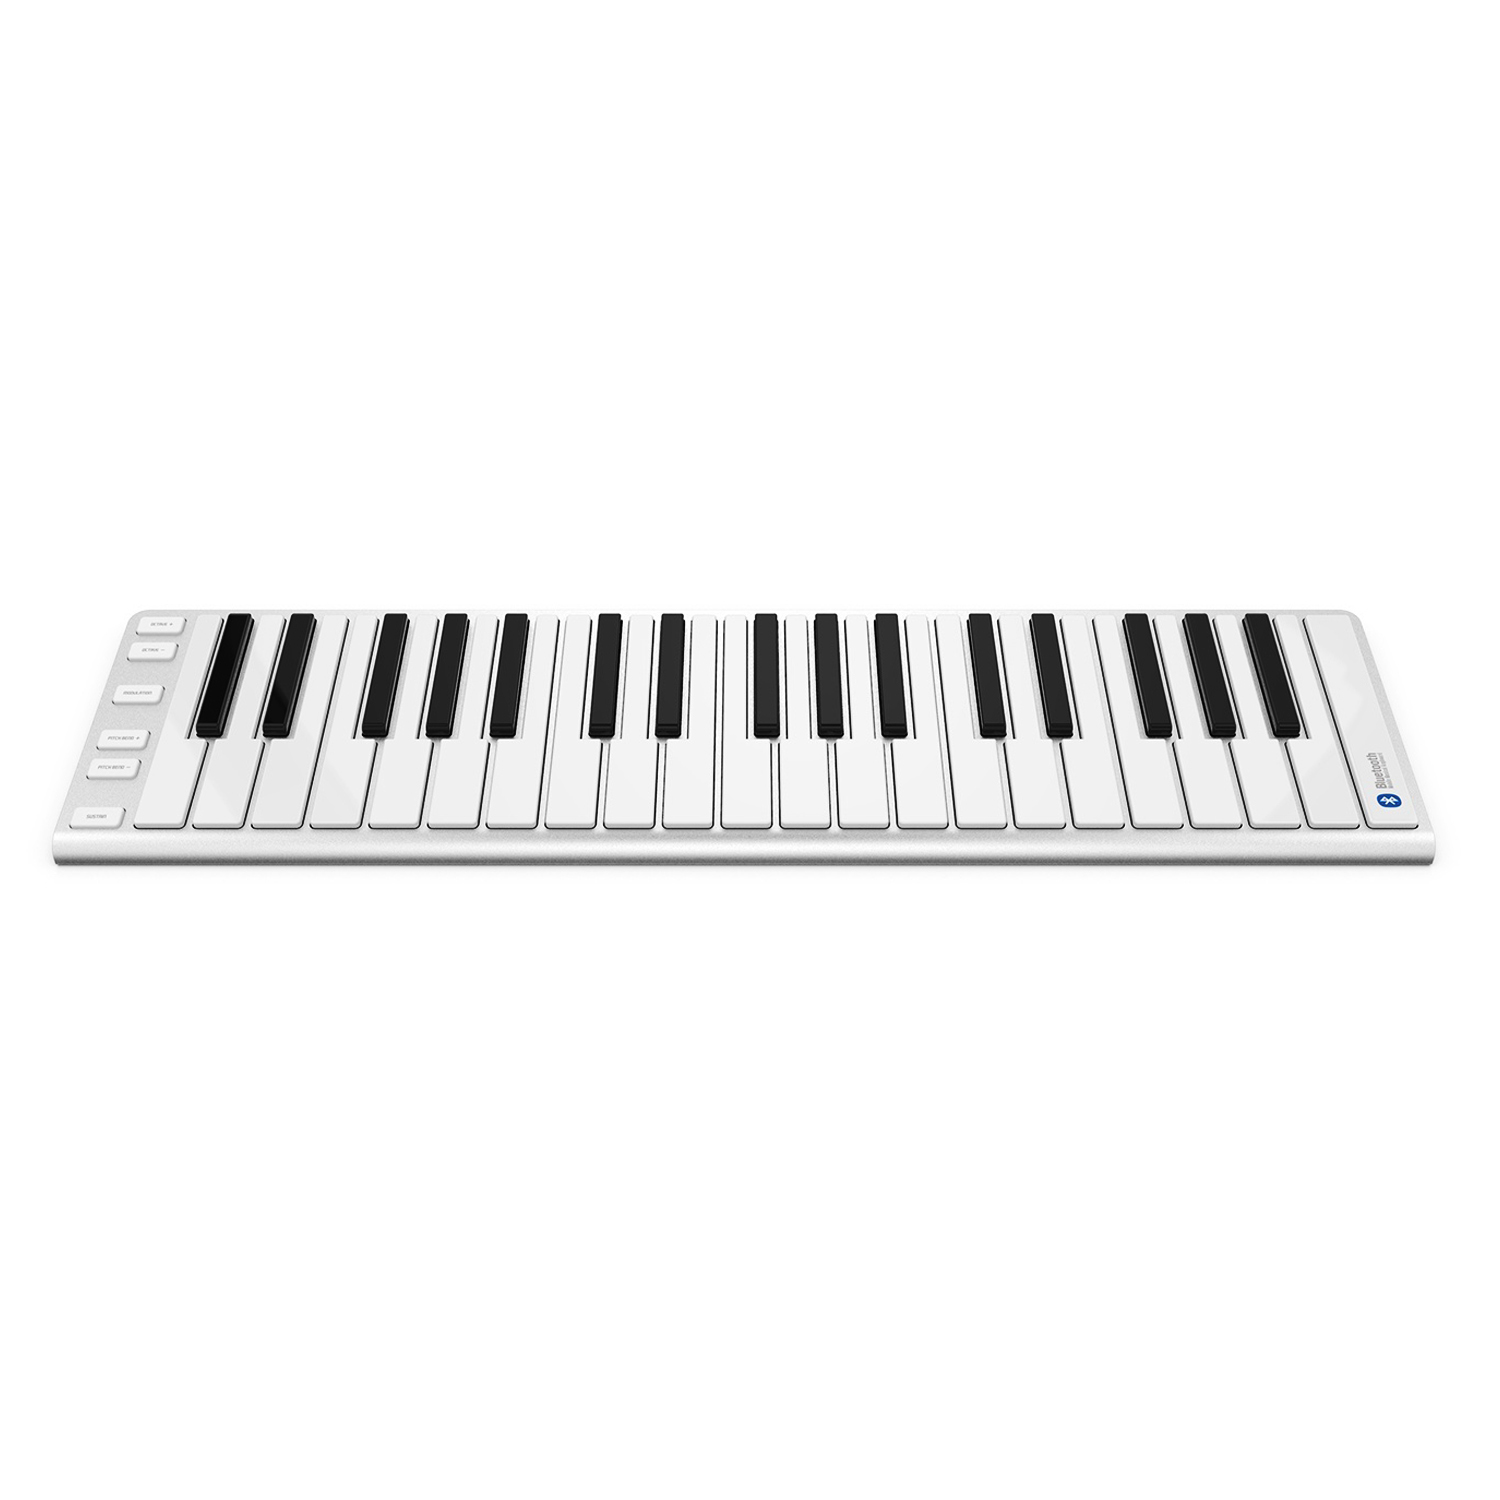 MIDI клавиатуры Artesia Xkey 37 LE midi клавиатуры midi контроллеры korg microkey2 61 air